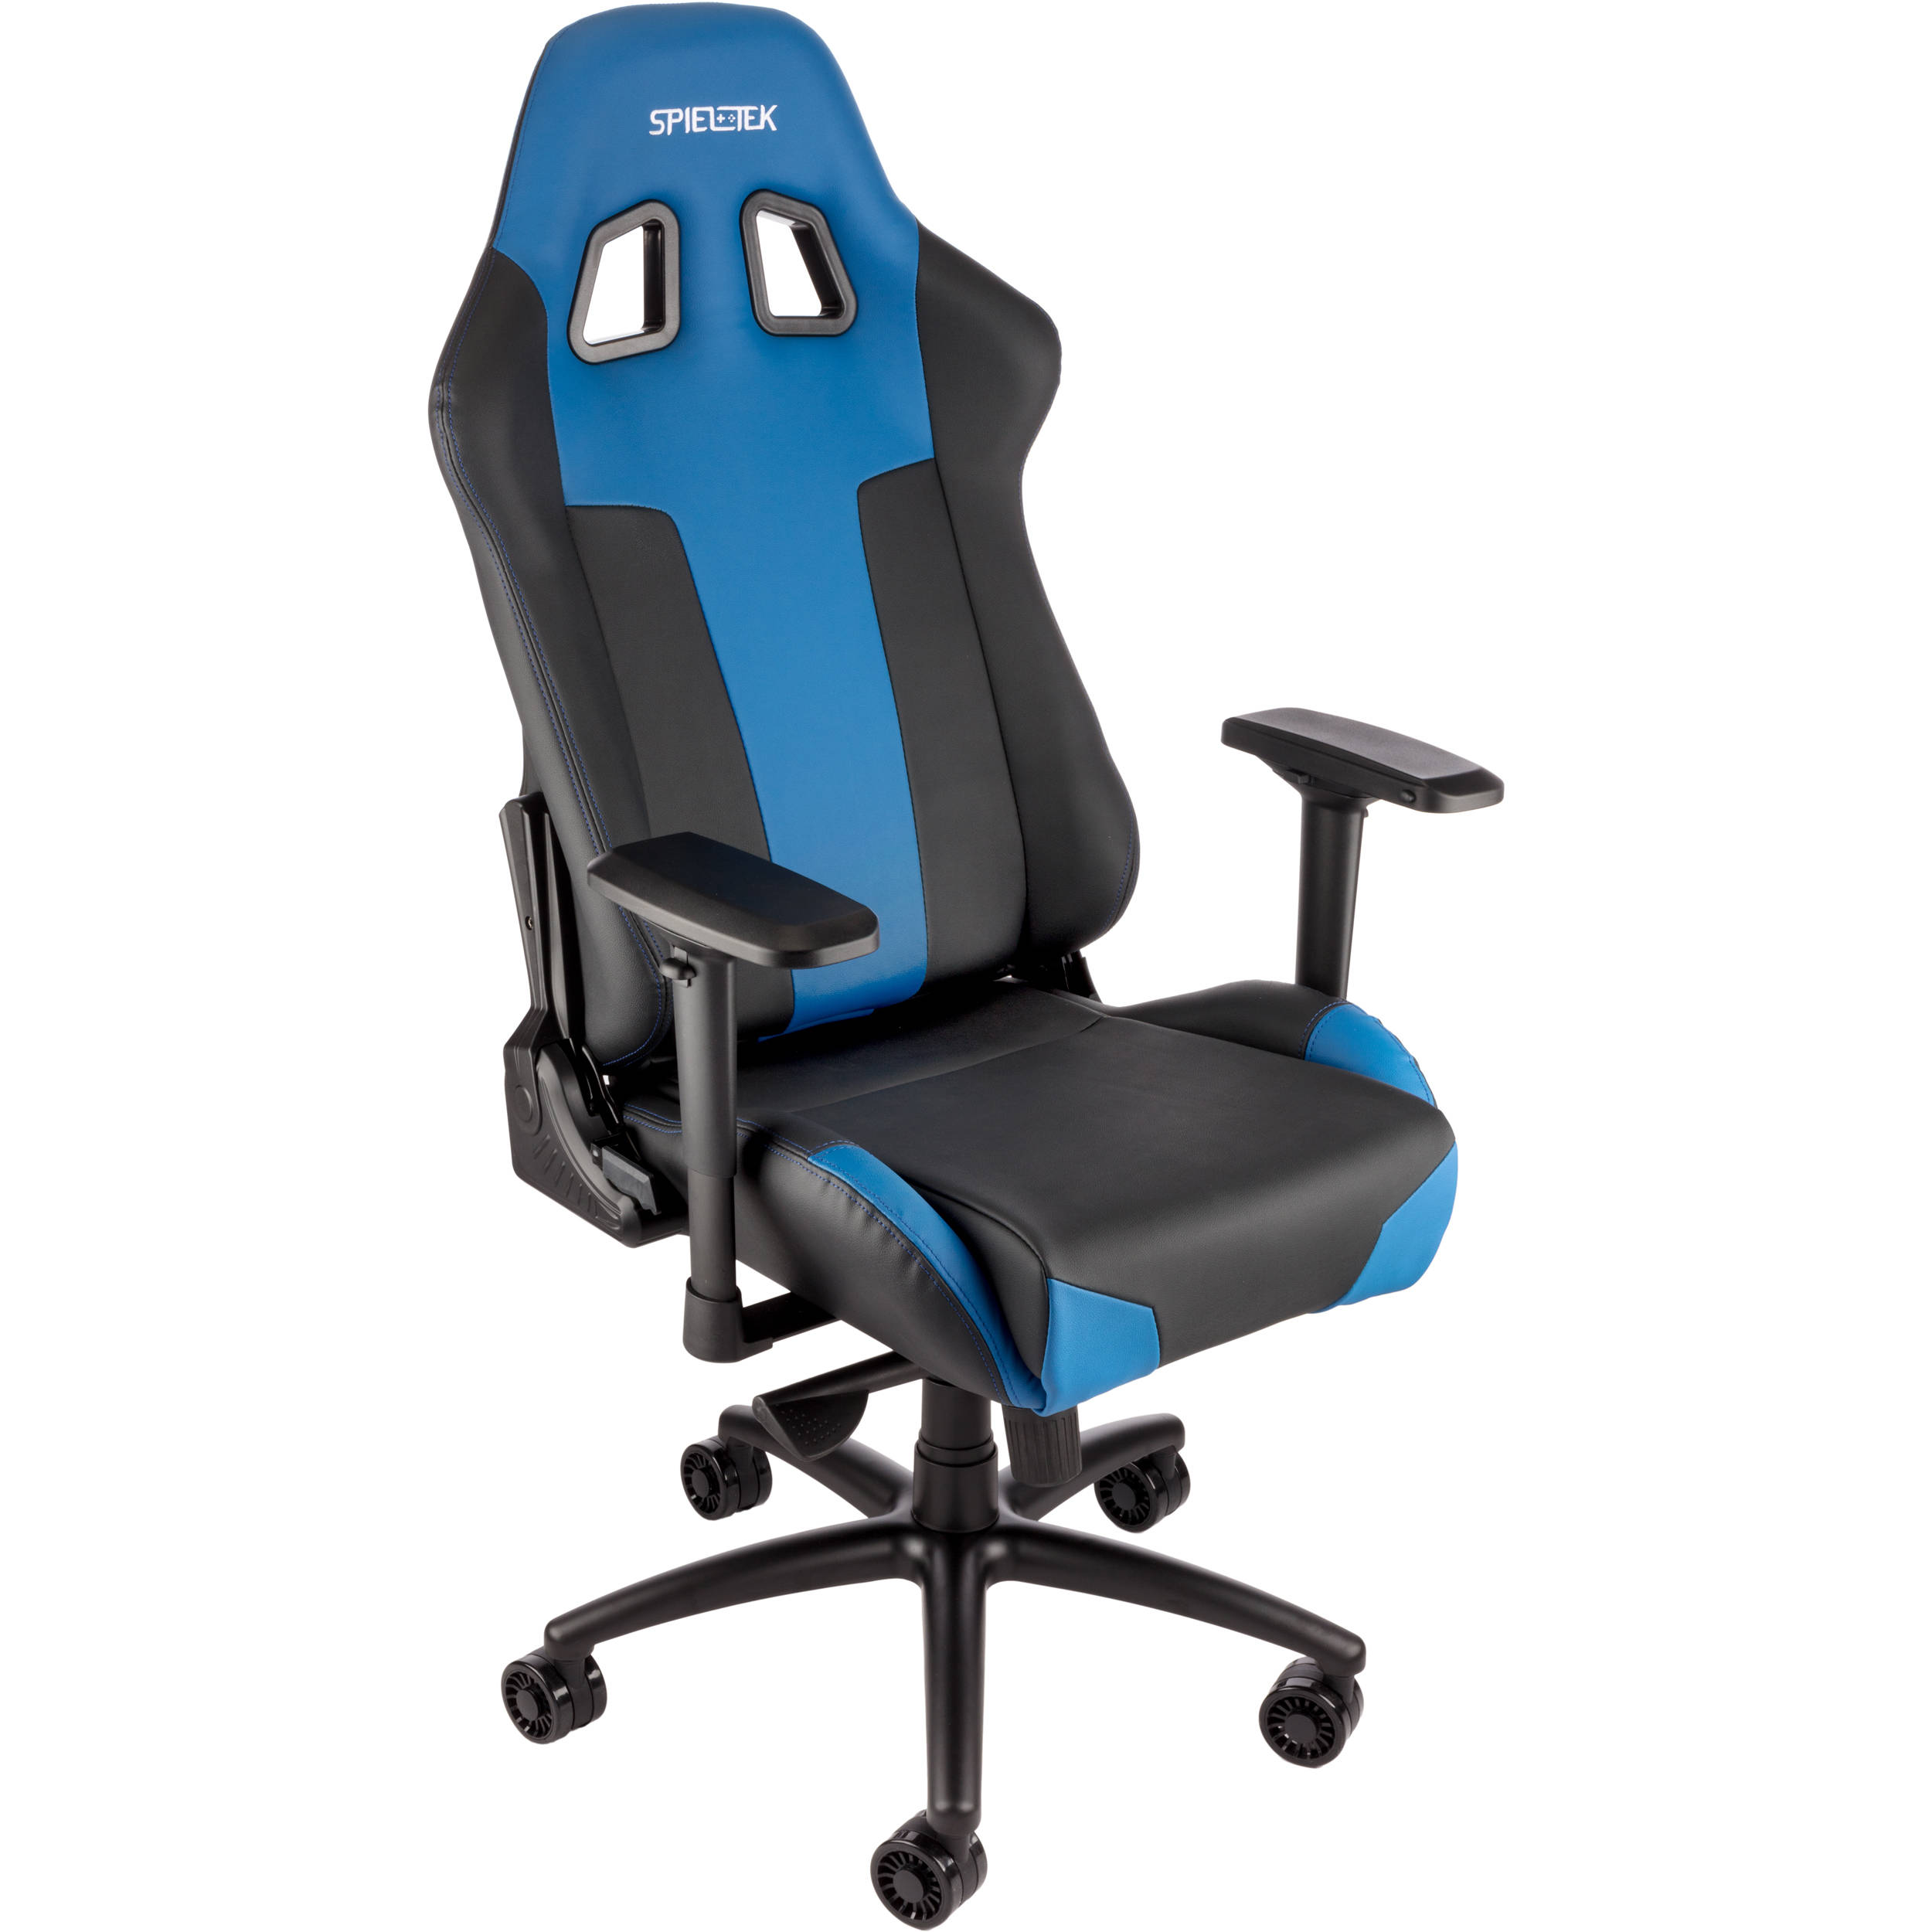 Spieltek Bandit Xl Gaming Chair V2 Black Blue Gc 211l Bbl B H